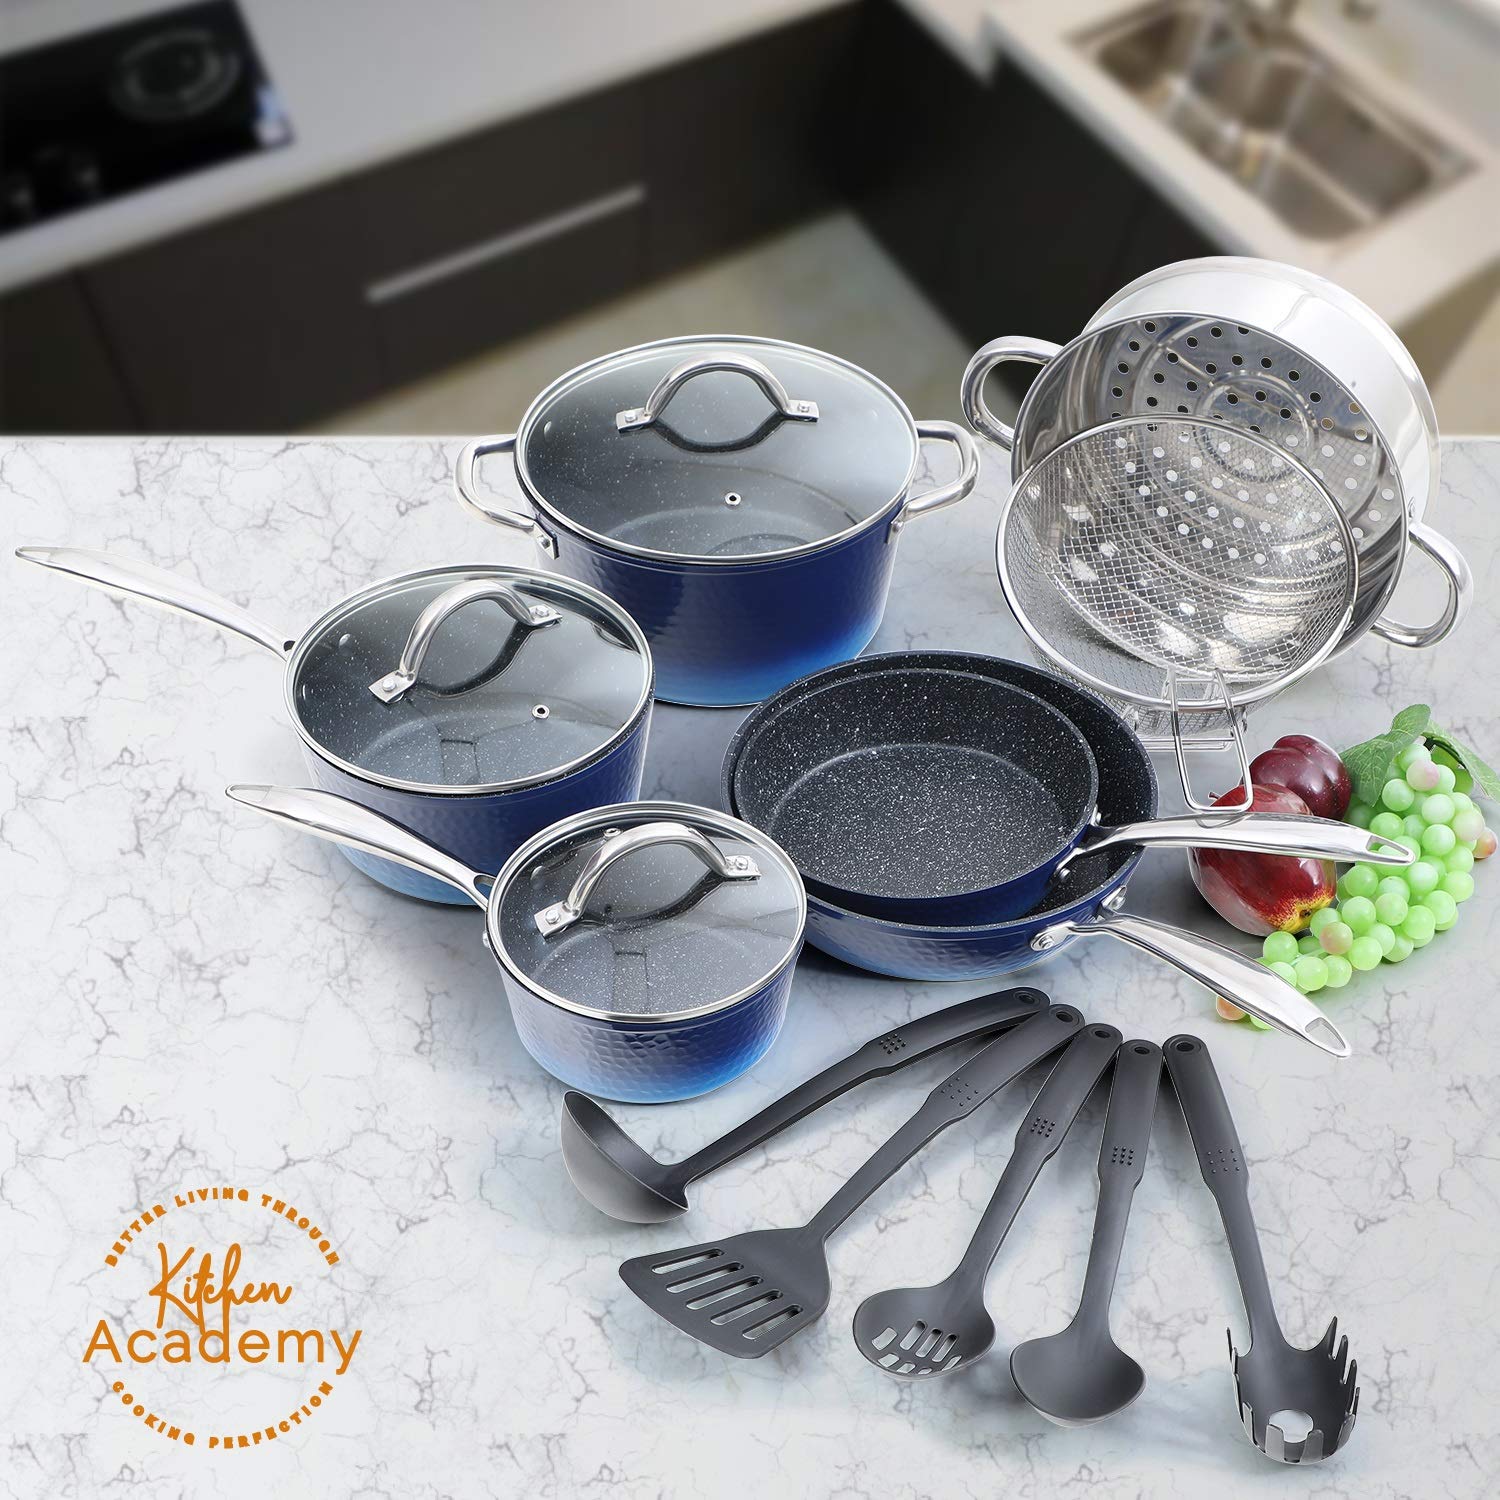 Kitchen Academy 15-piece Nonstick Granite-coated Cookware Set - Black